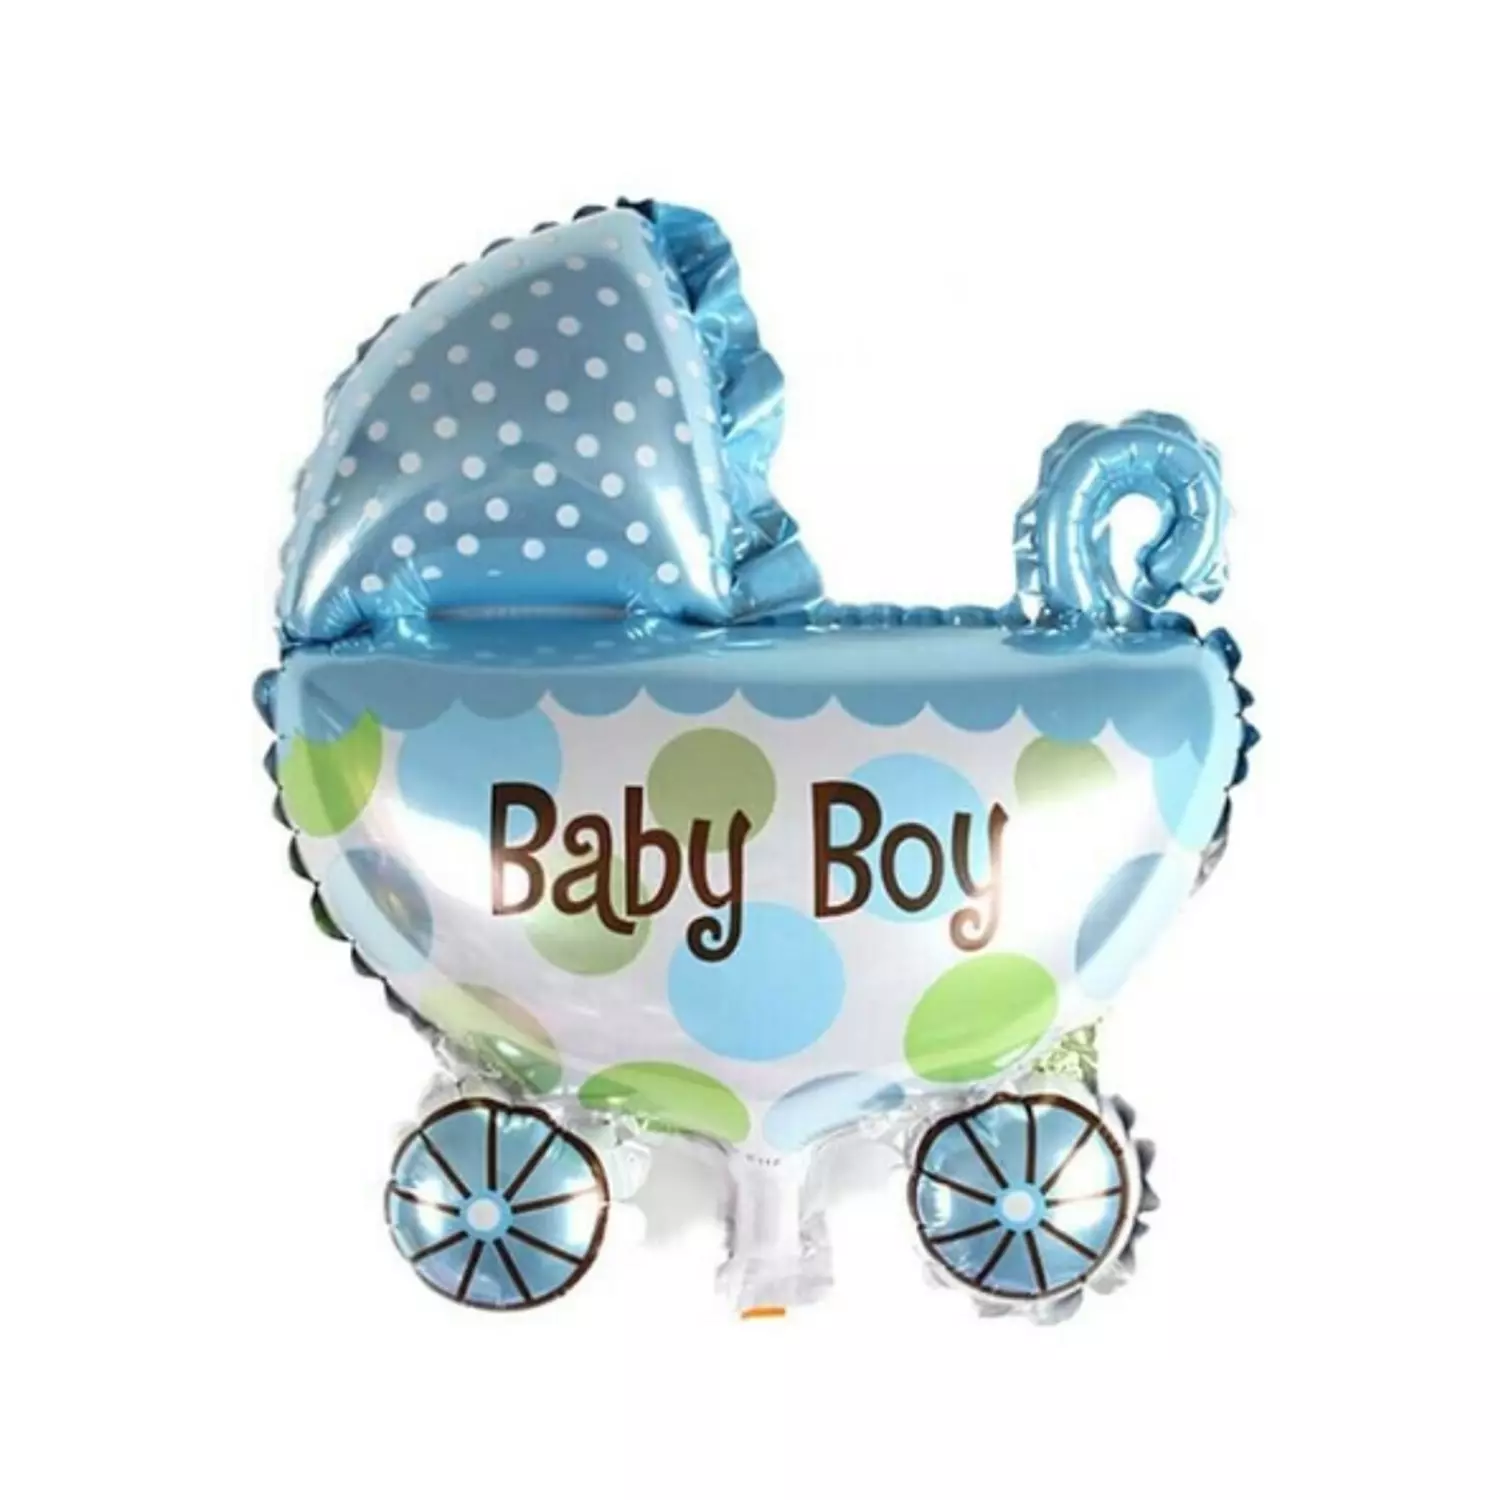 Baby Boy Stroller Balloon hover image